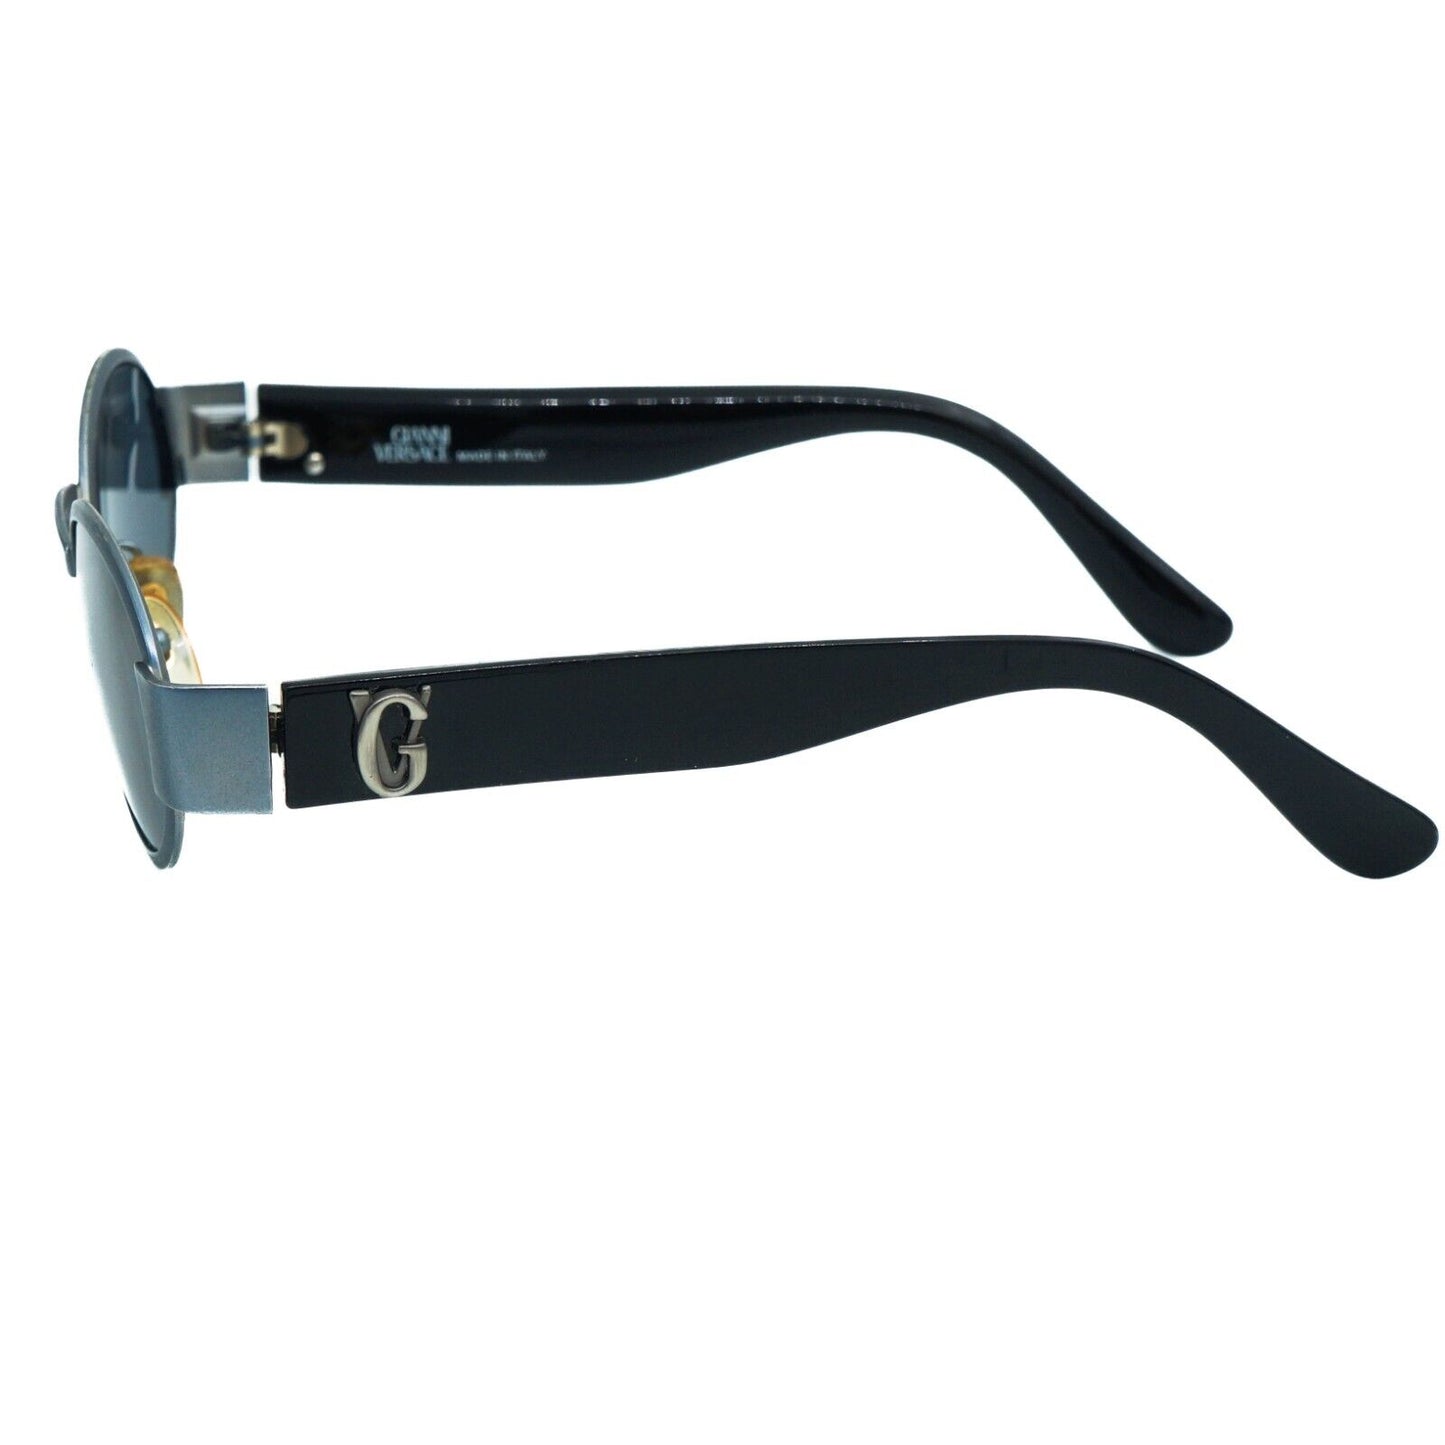 GIANNI VERSACE S48 Black Silver Metal Sunglasses Vintage 90s